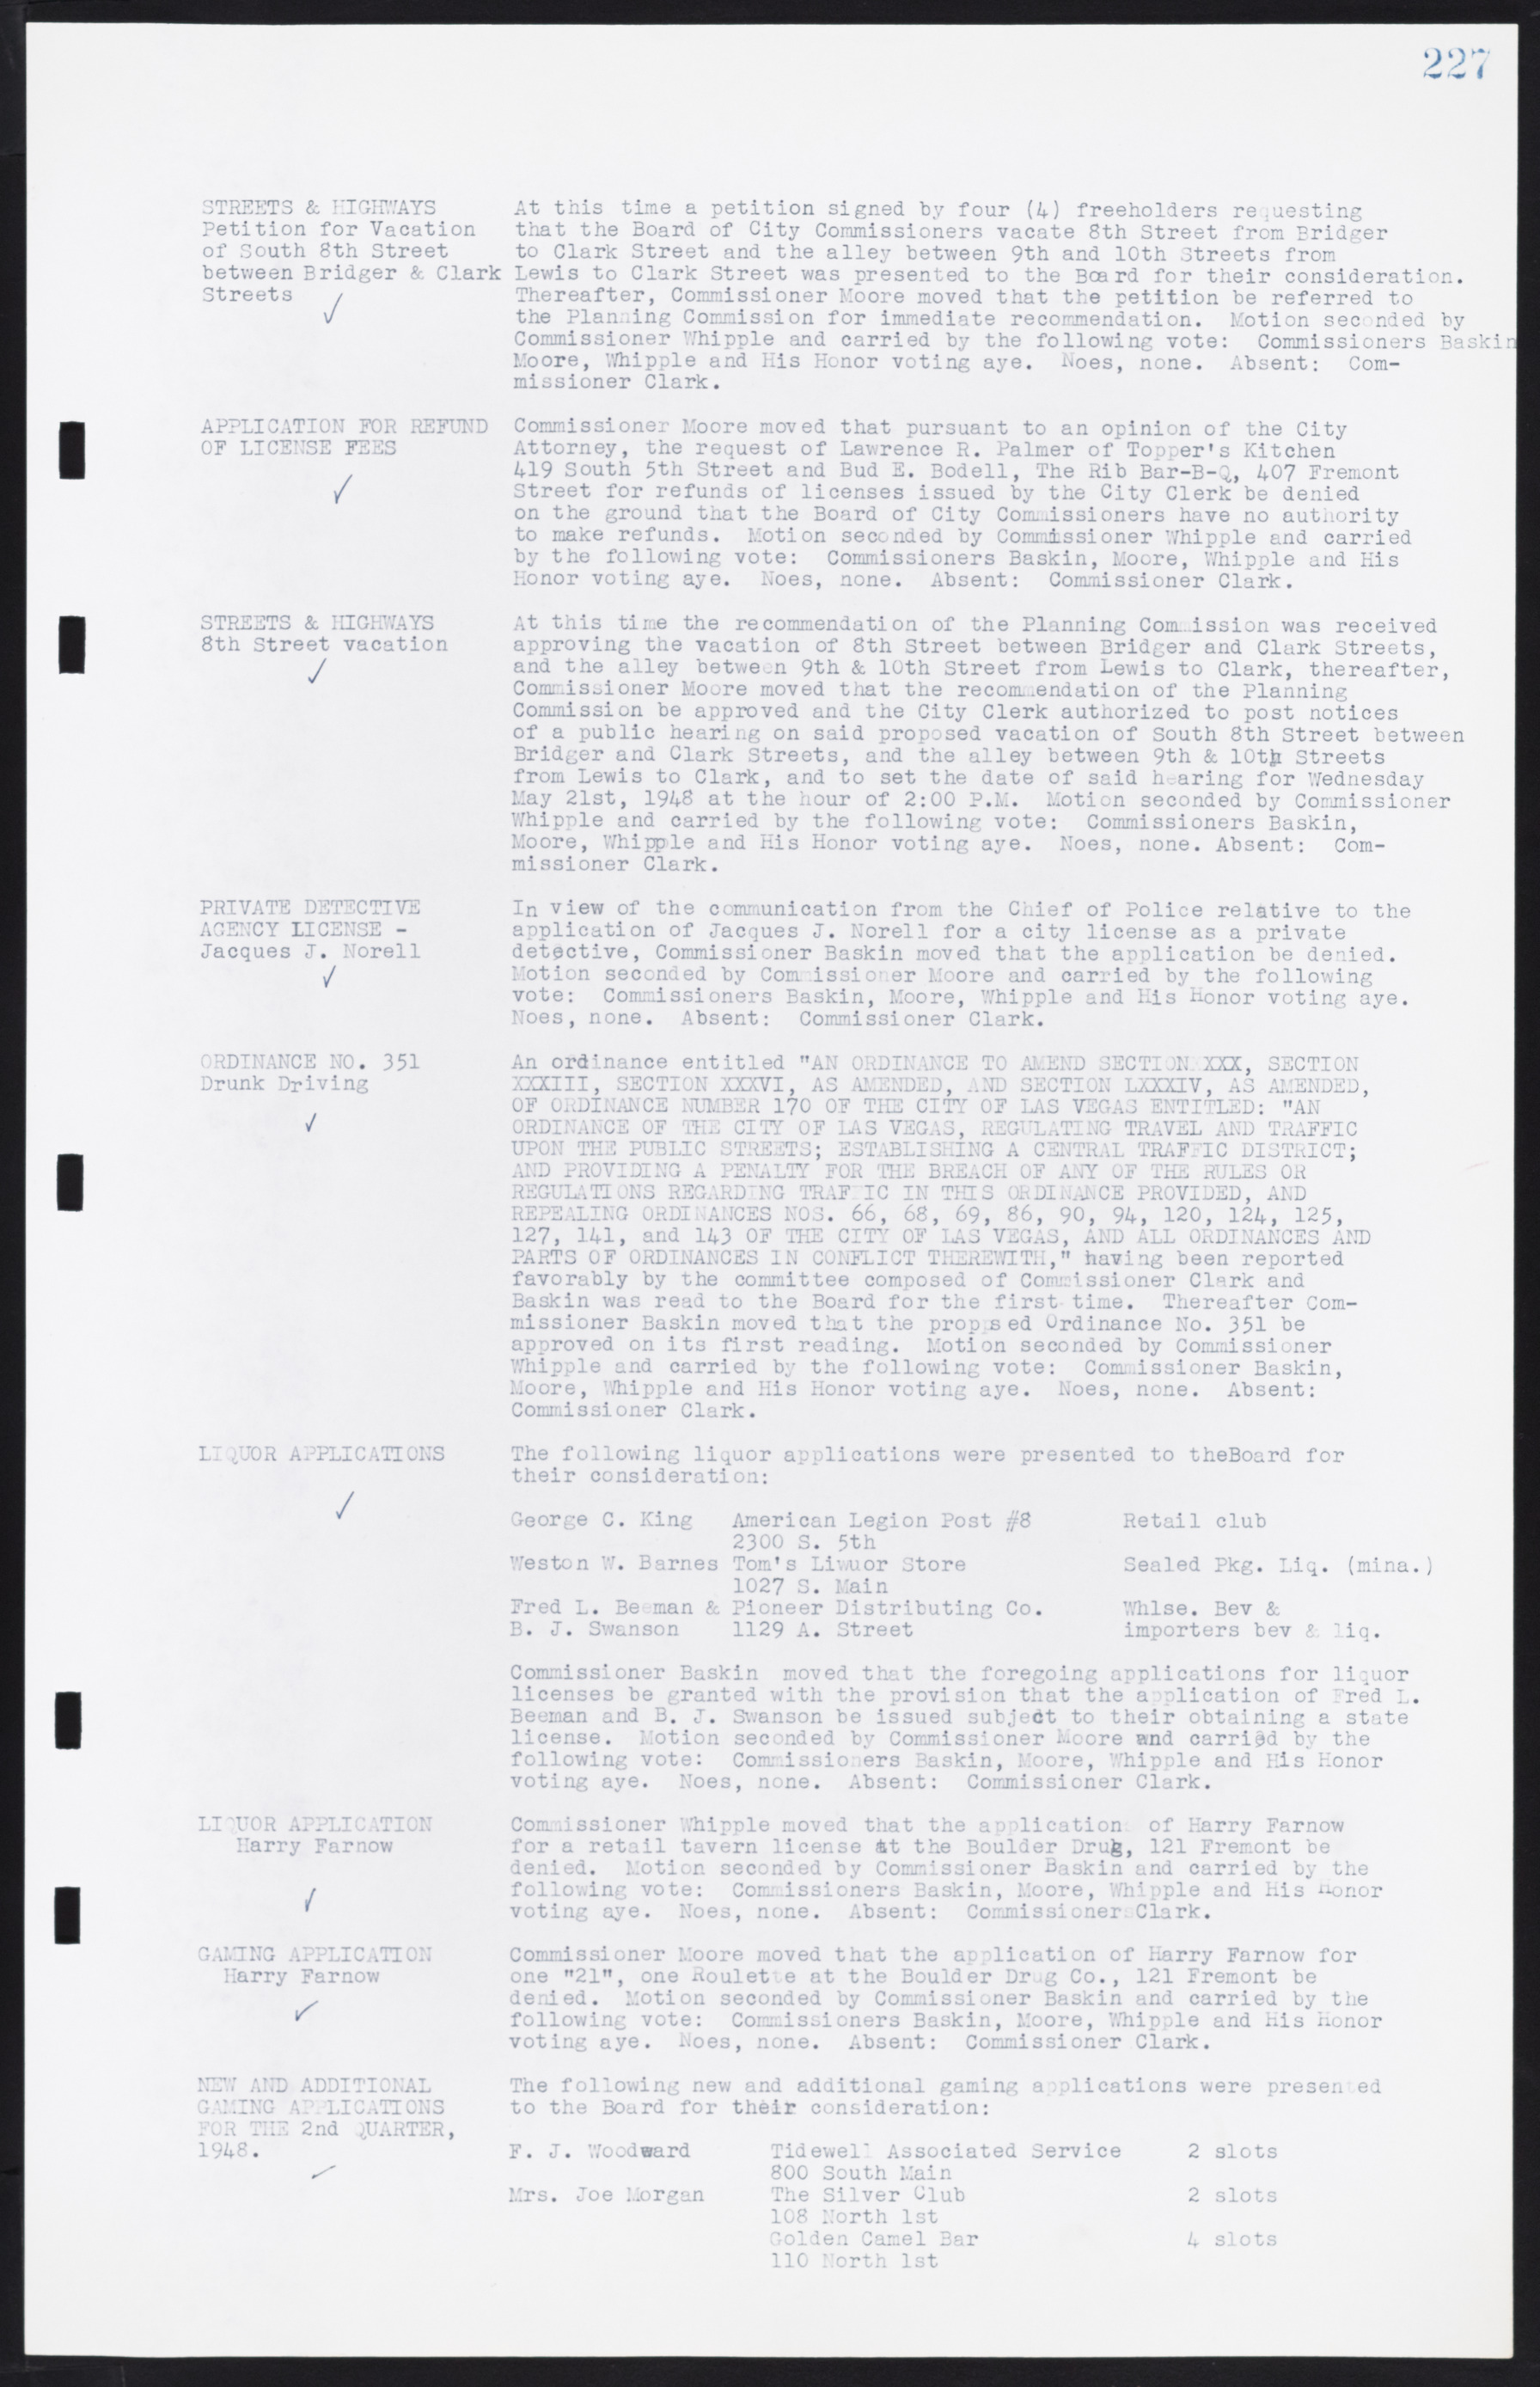 Las Vegas City Commission Minutes, January 7, 1947 to October 26, 1949, lvc000006-249